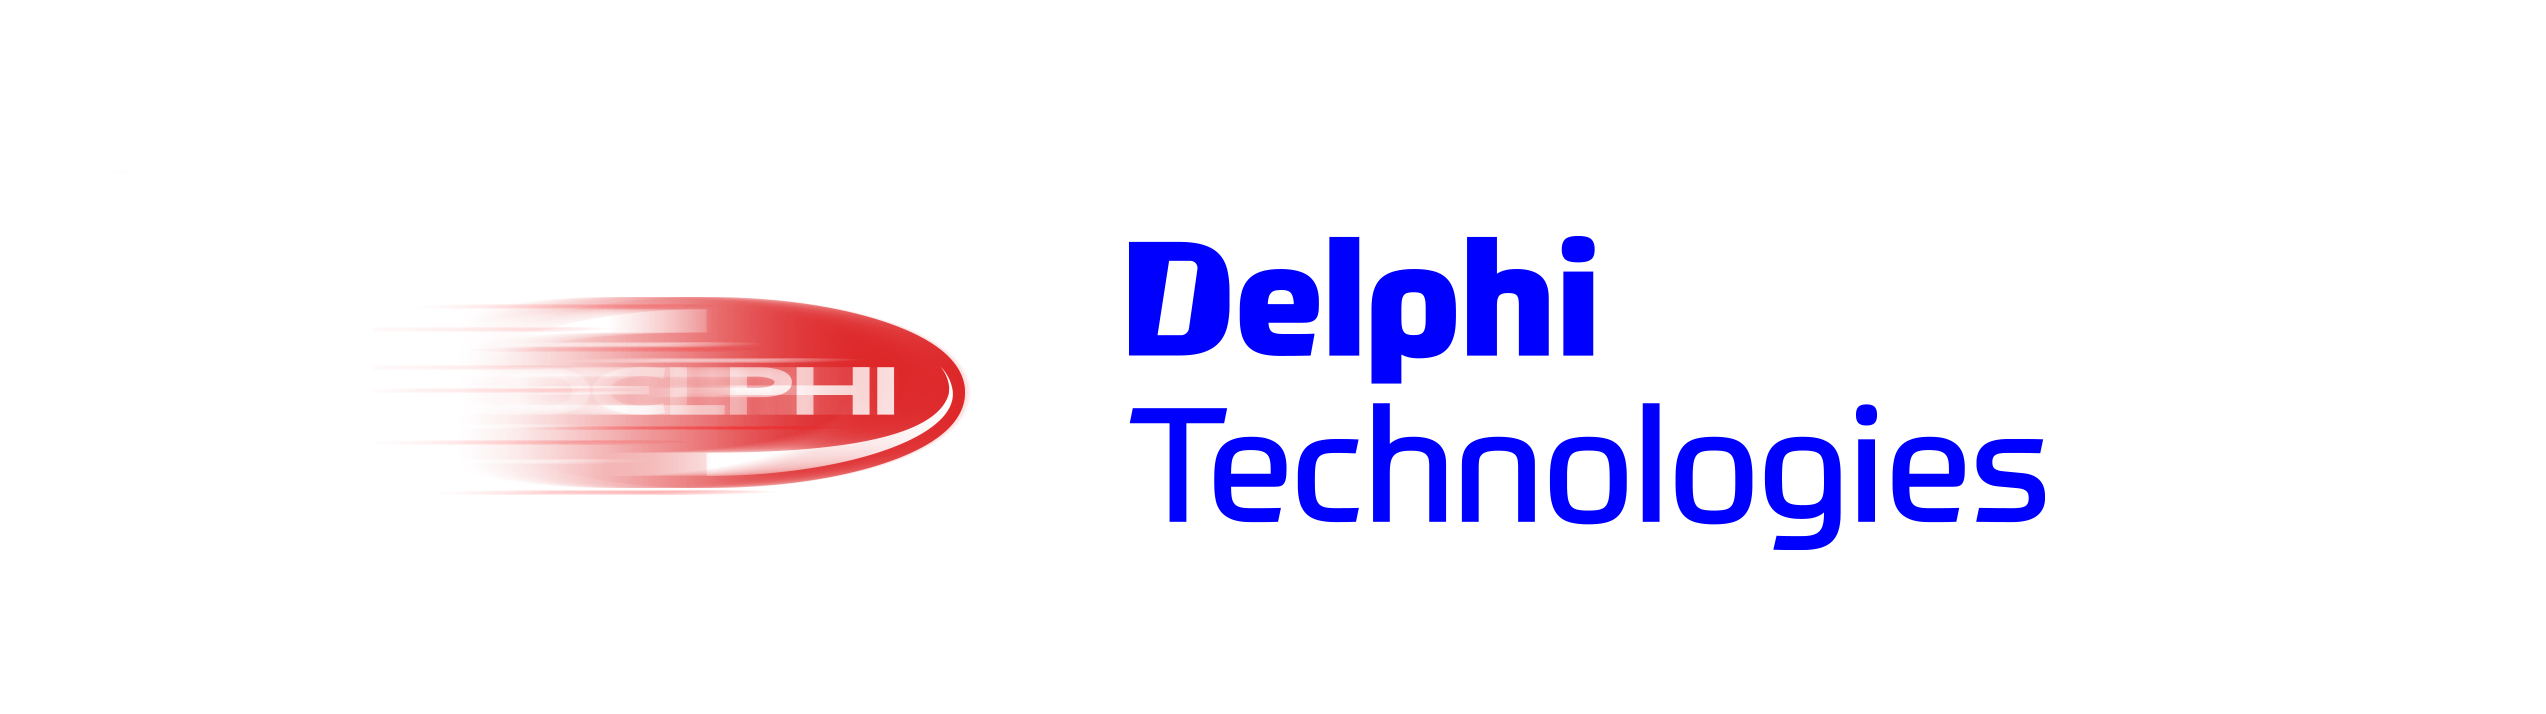 Delphi Logo - Delphi Technologies chooses Automechanika to reveal a new brand